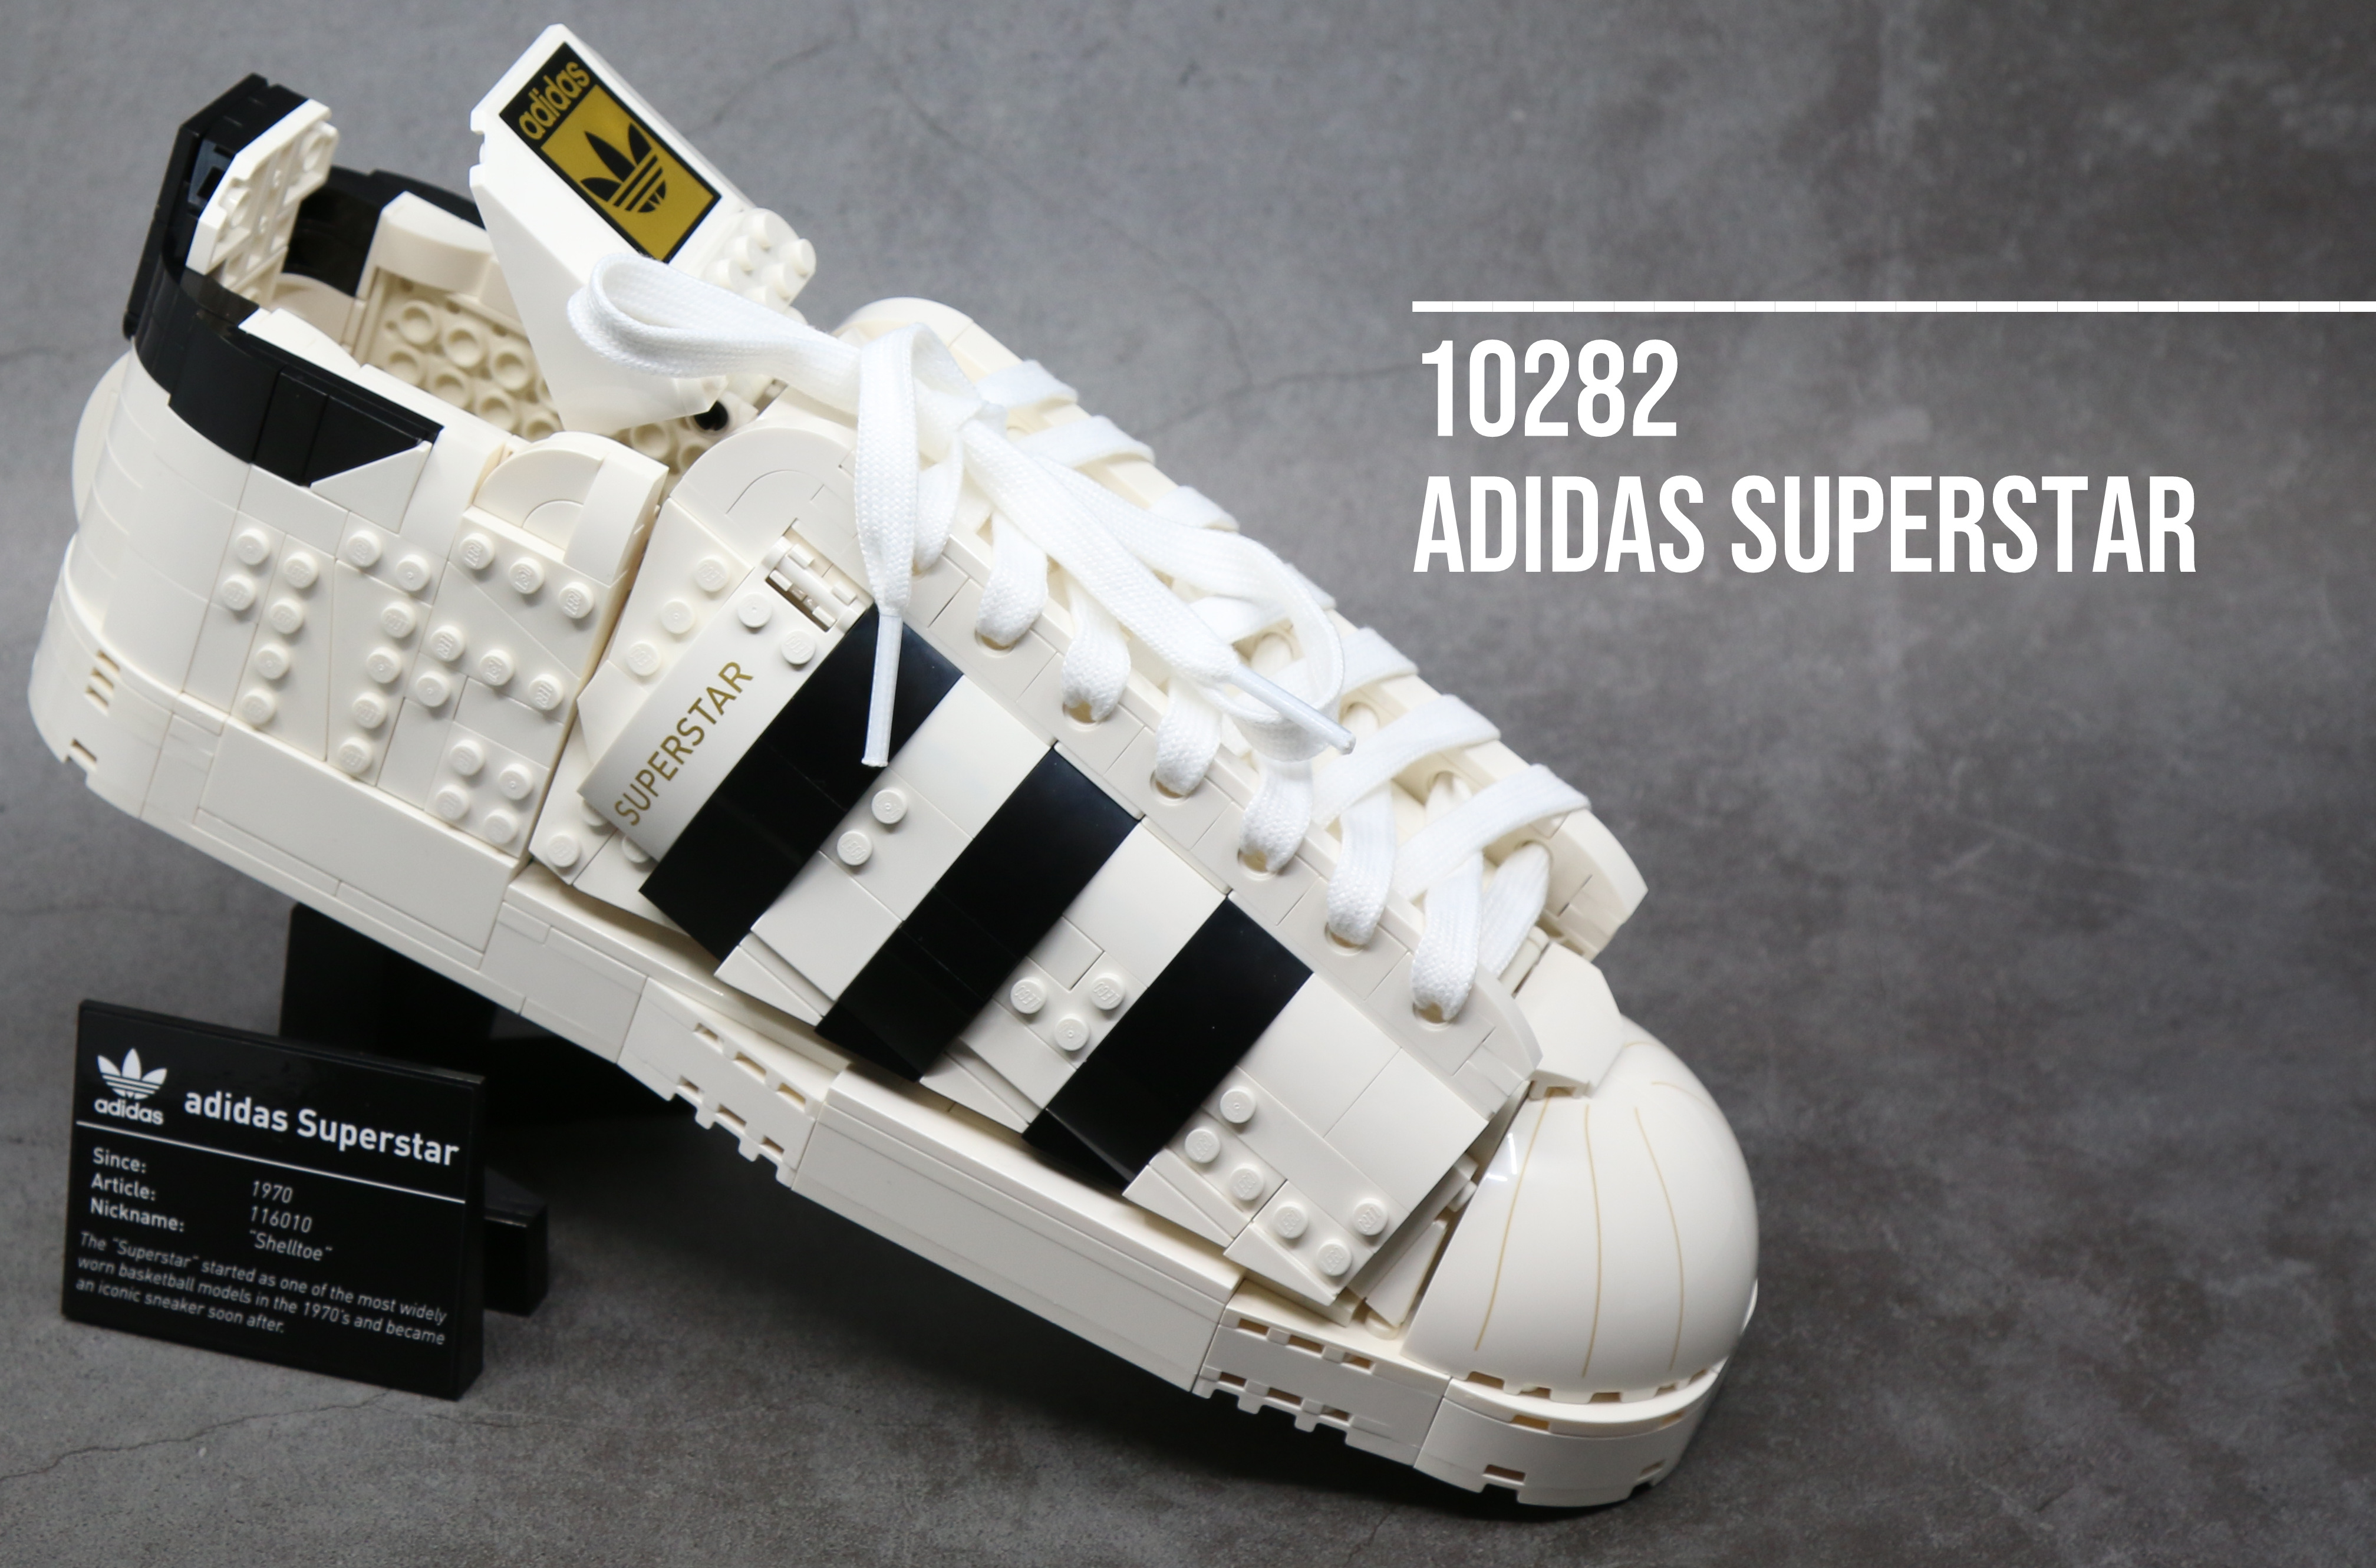 درع للتصميم Review: LEGO 10282 Adidas Superstar - Jay's Brick Blog درع للتصميم